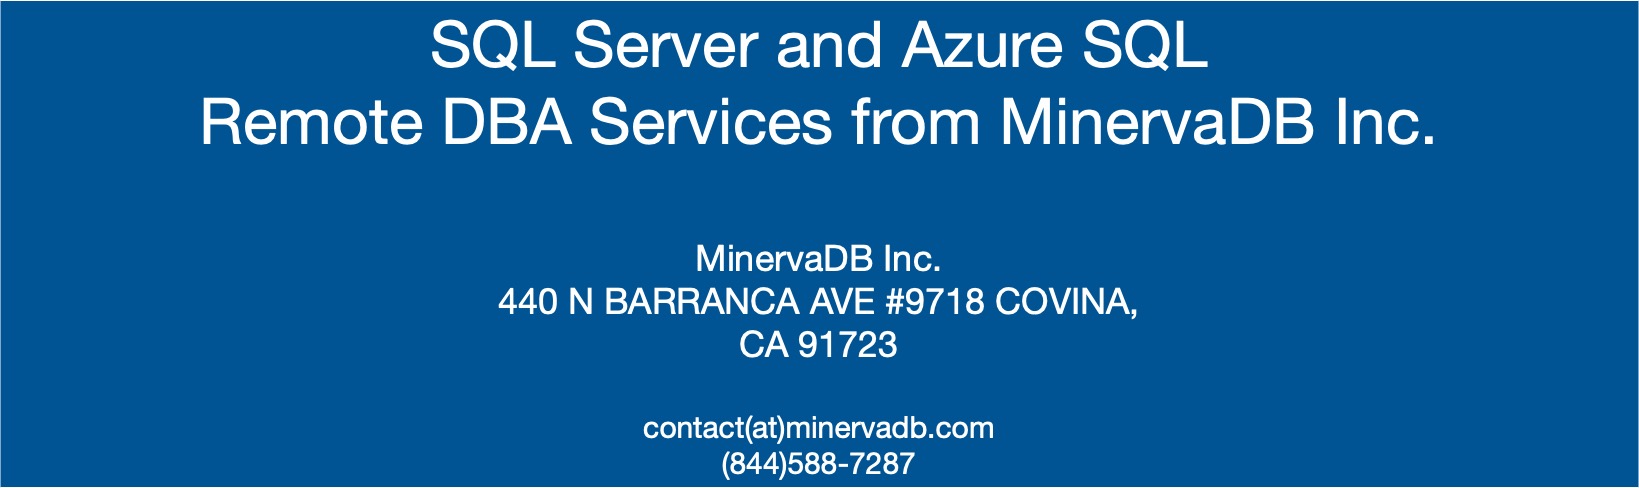 SQL Server and Azure SQL Remote DBA Services.jpg